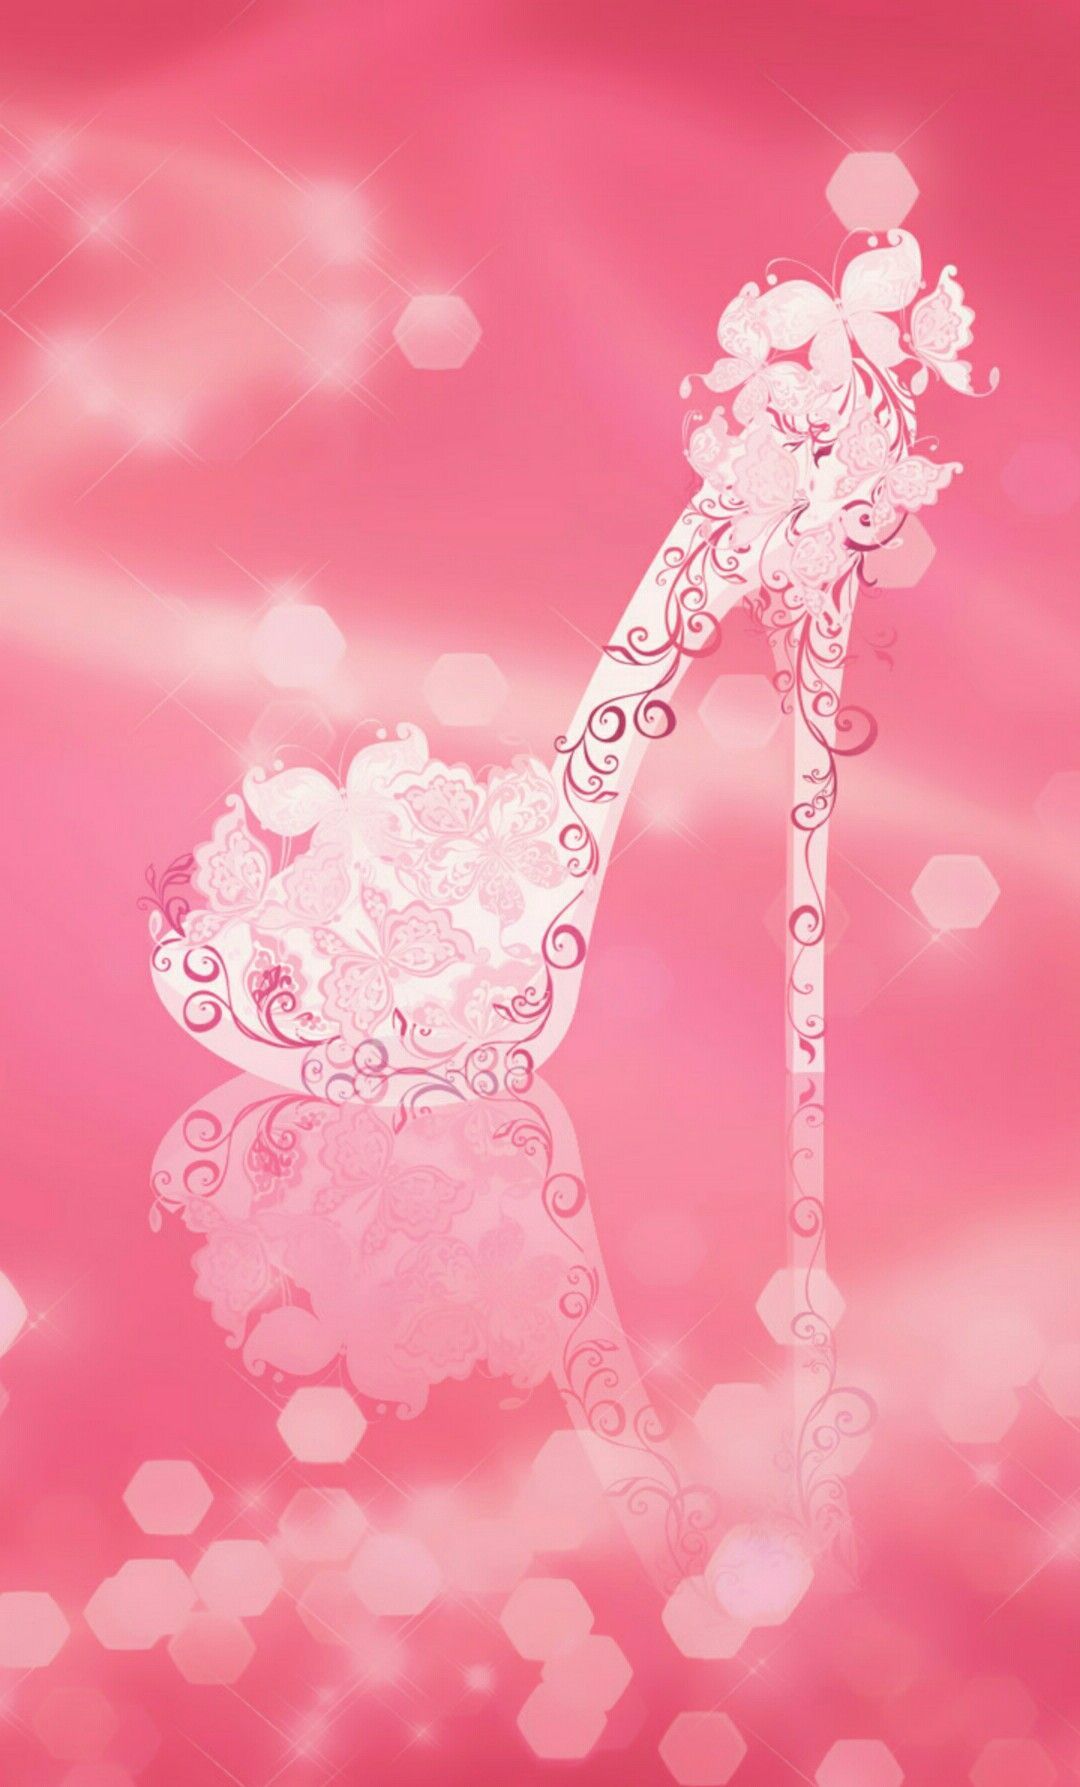 1080x1787 High Heel On Pink Wallpaper By Artist Unknown Phone Wallpaper Image Cute Girl Wallpaper Wallpaper Background